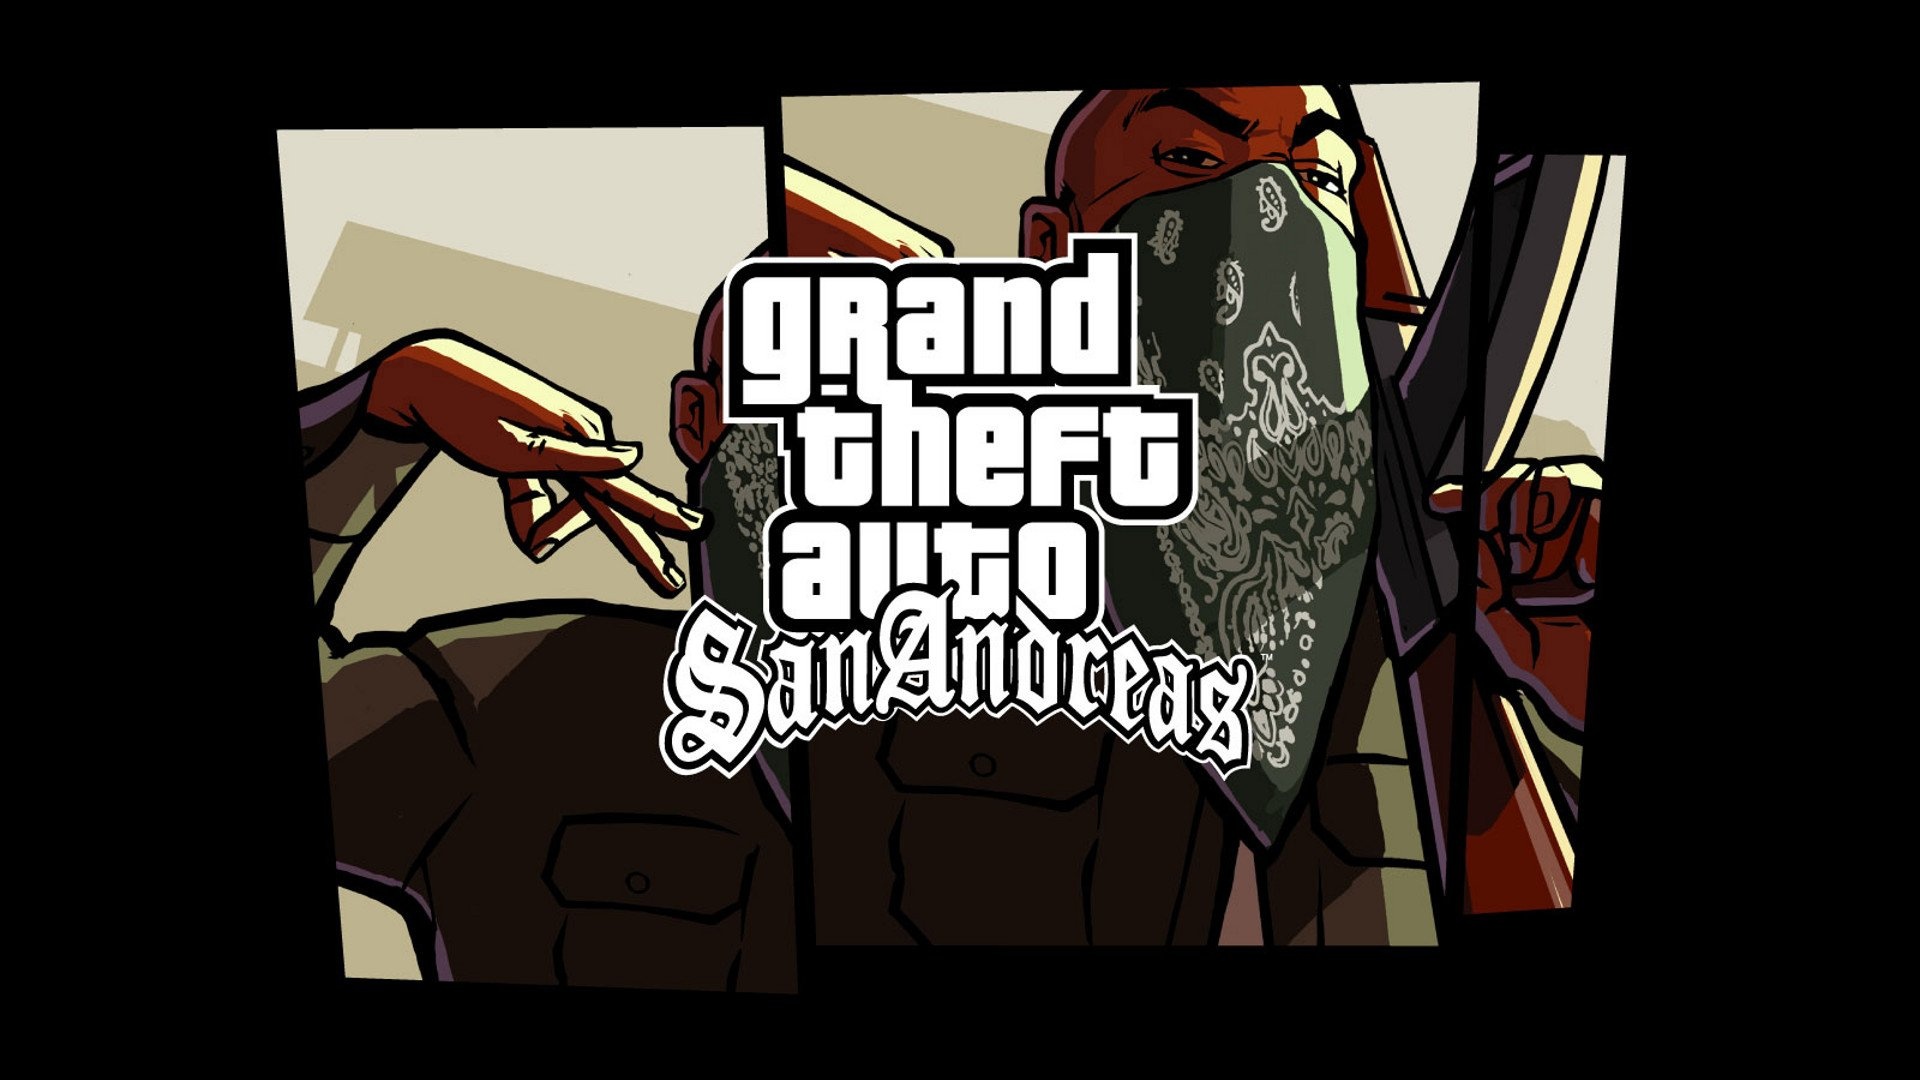 GTA: San Andreas, Grand theft auto san andreas HD wallpaper, Cityscape, 1920x1080 Full HD Desktop